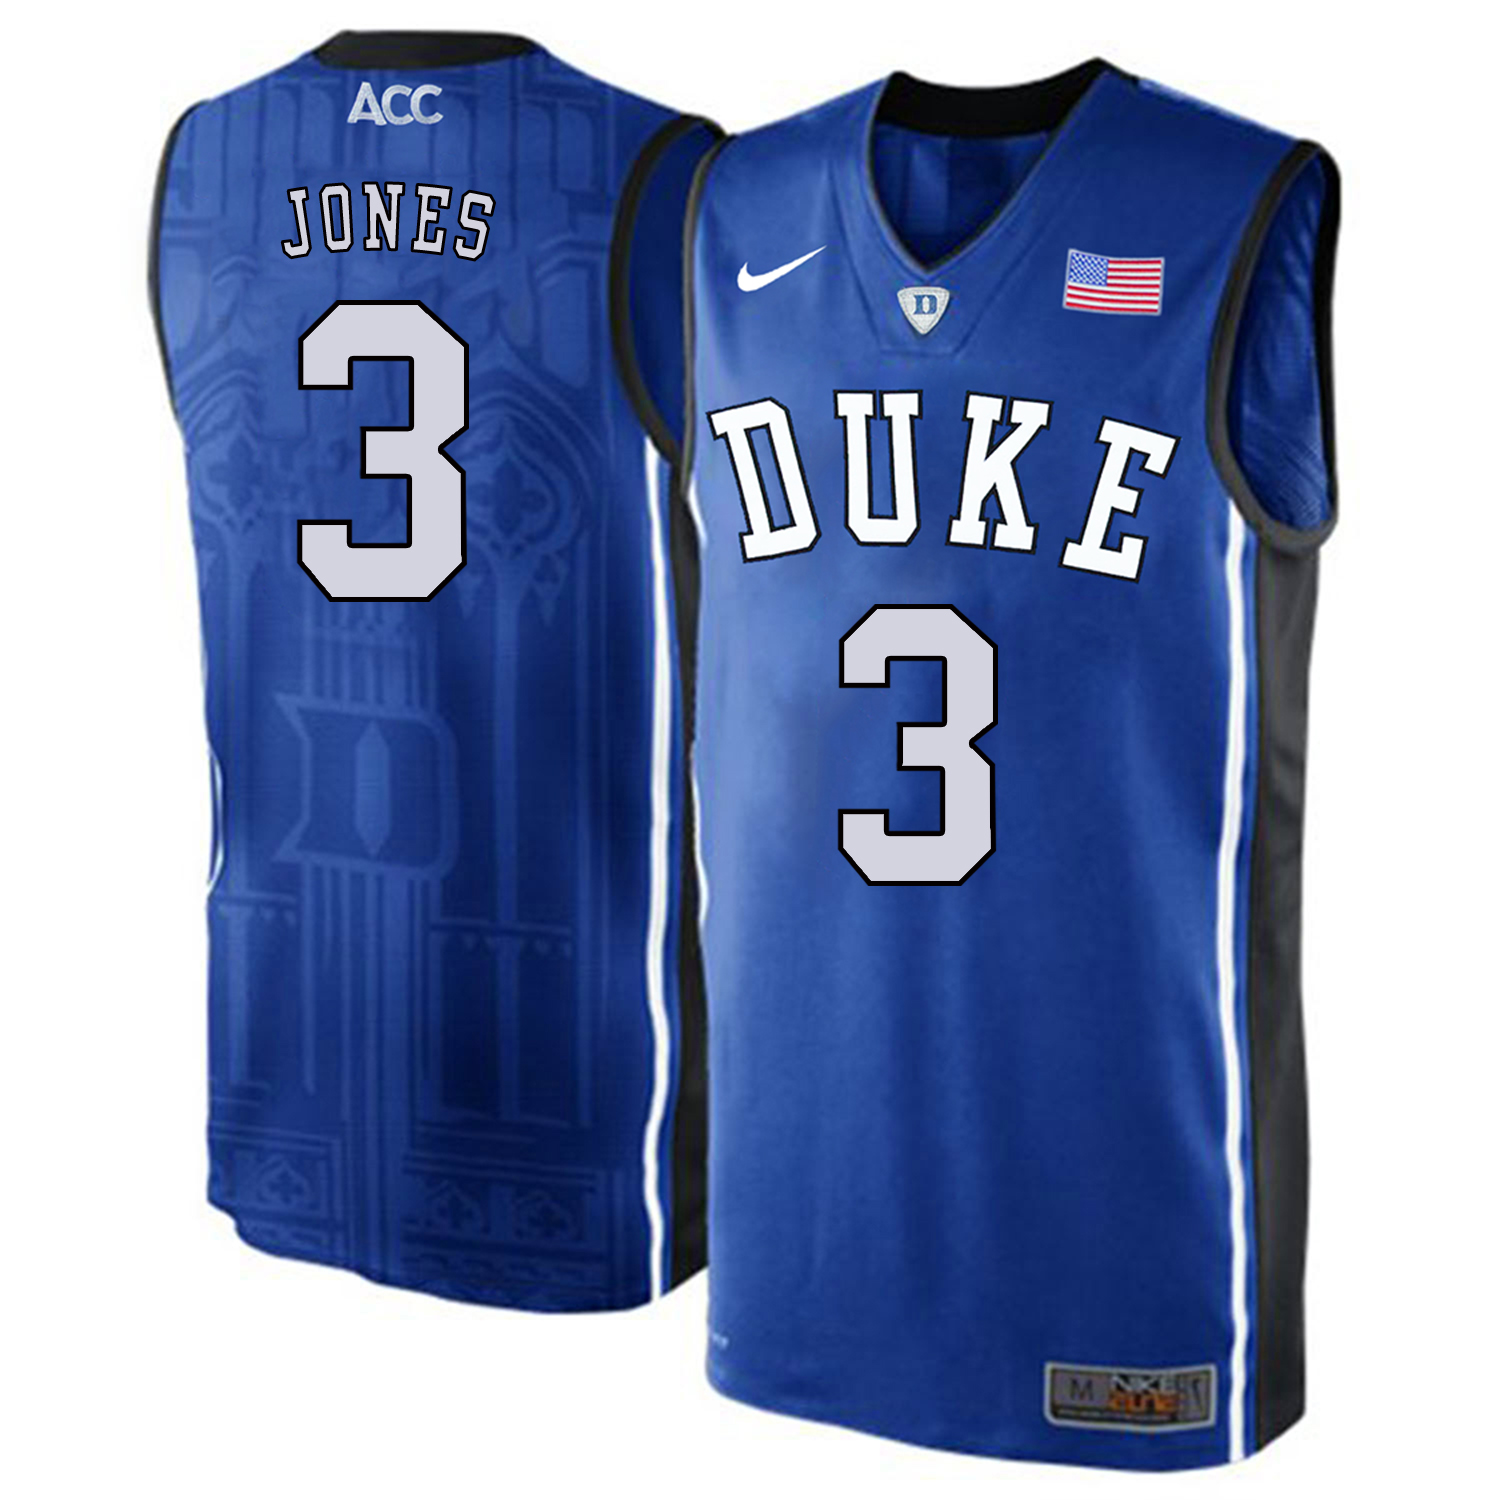 Duke Blue Devils 3 Tre Jones Blue Elite Nike College Basketball Jersey